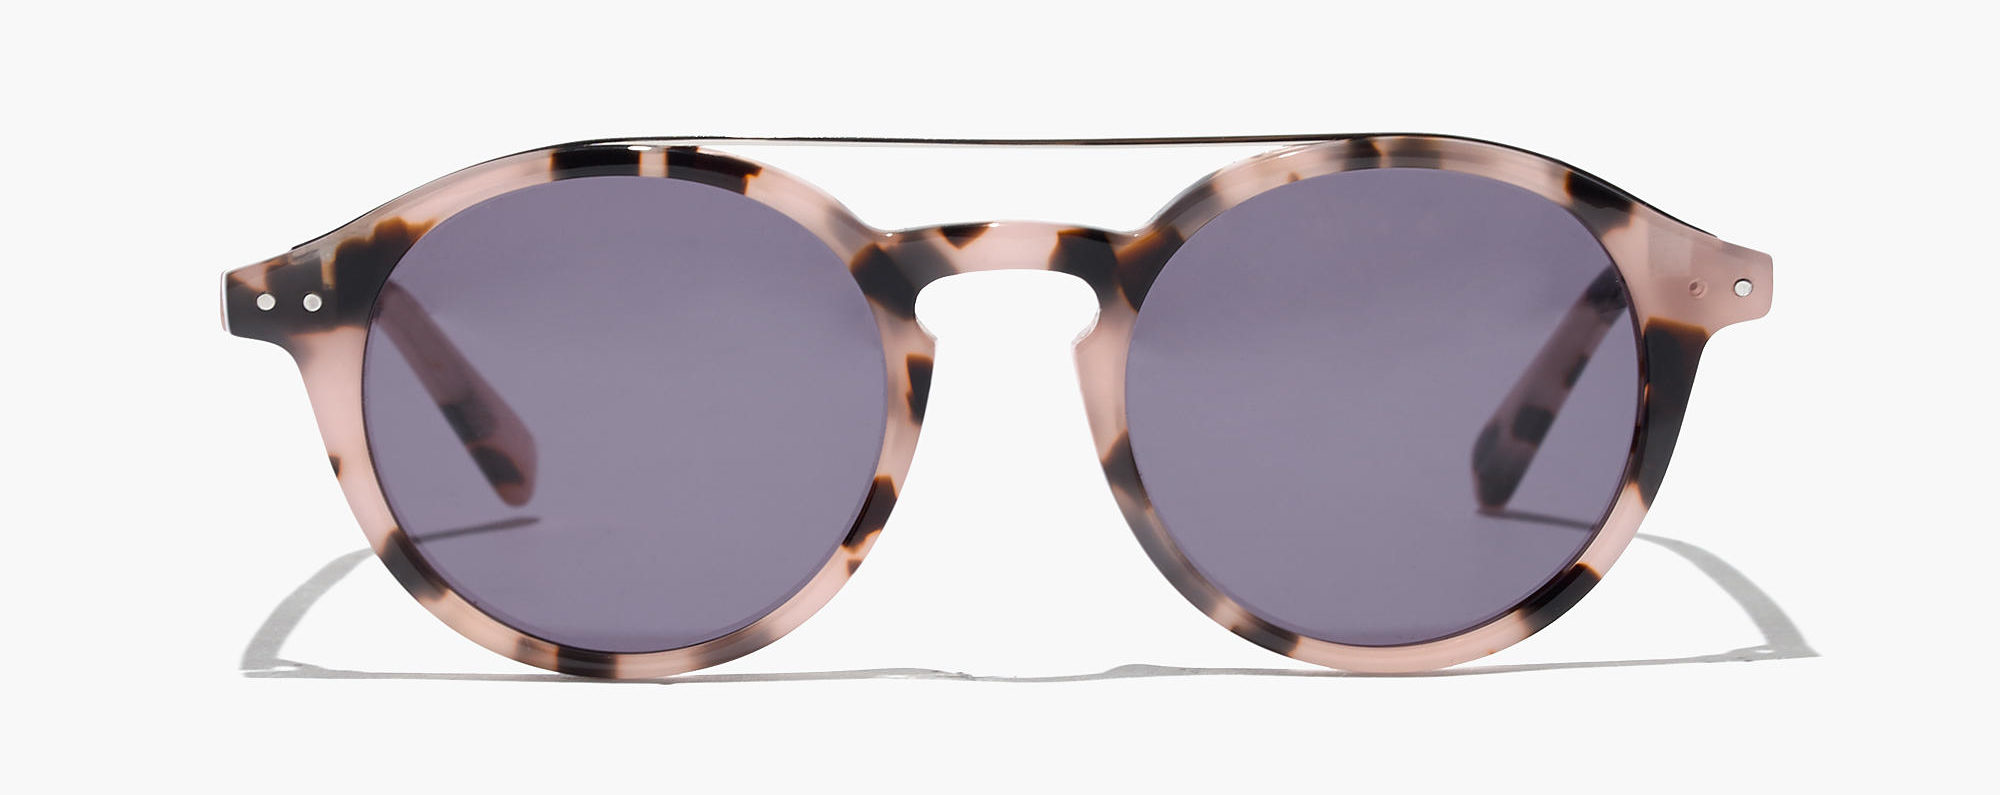 Madewell Omaha Sunglasses with purple lenses